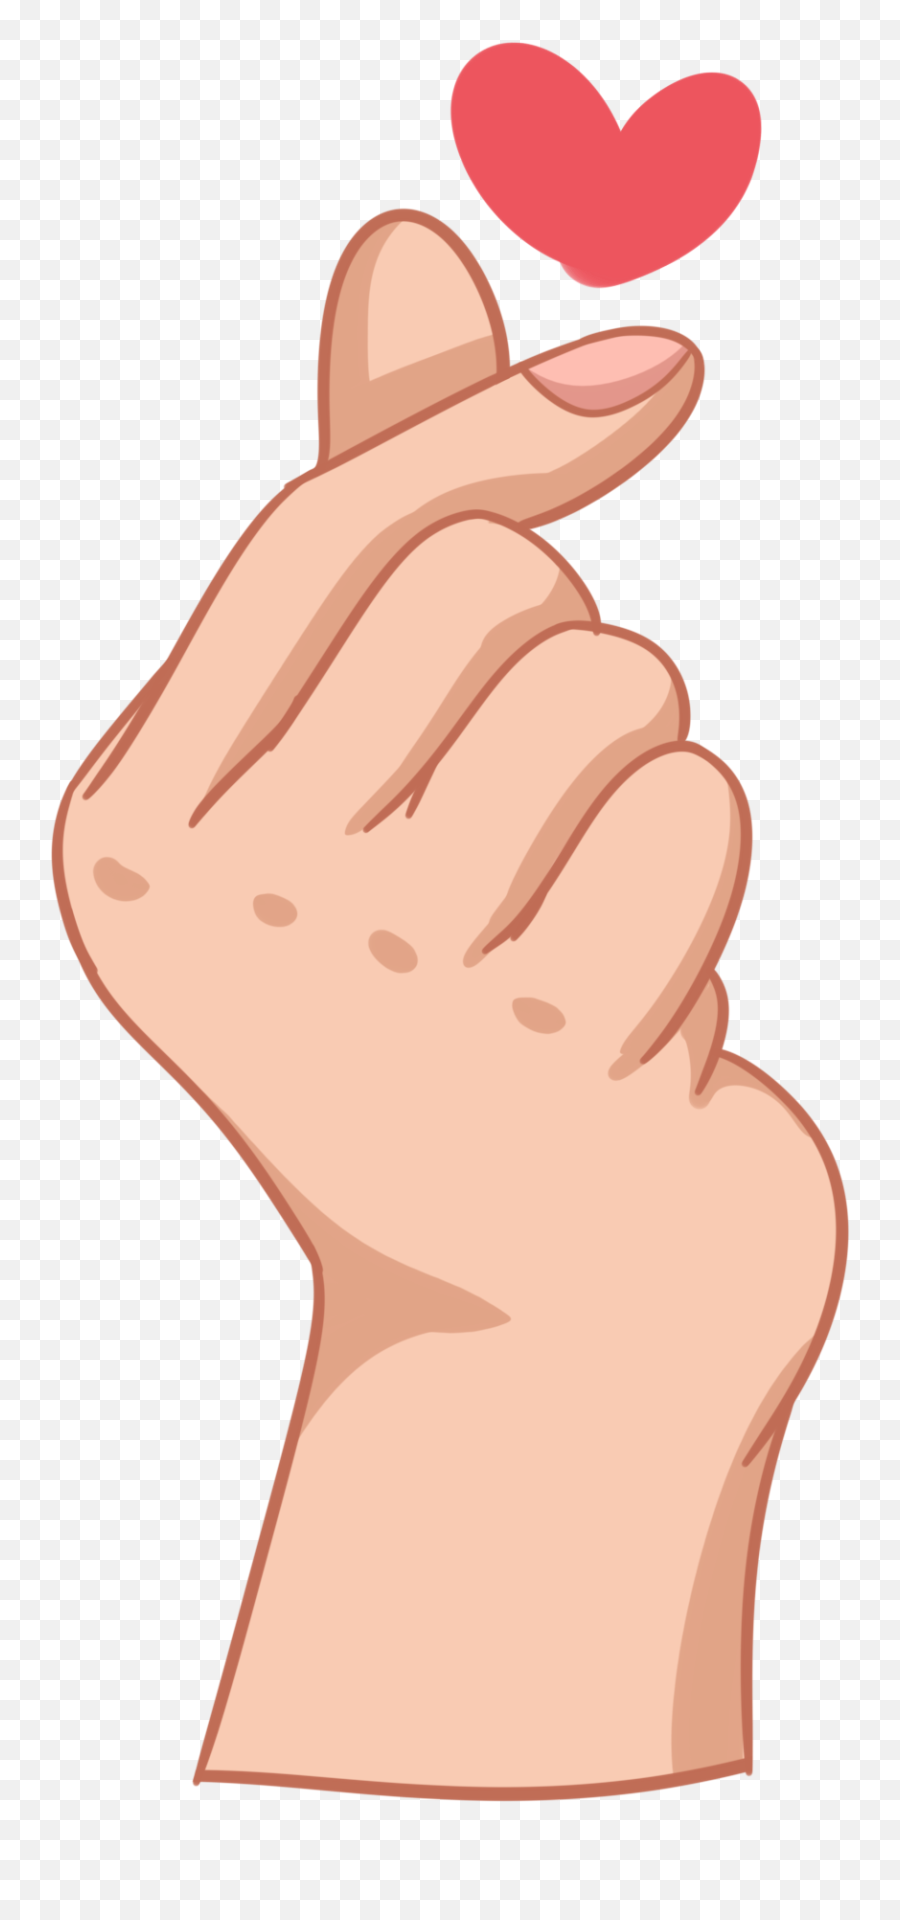 Ftestickers Hand Heart Love Sign Red Emoji,Clapping Hands Emoji Meme